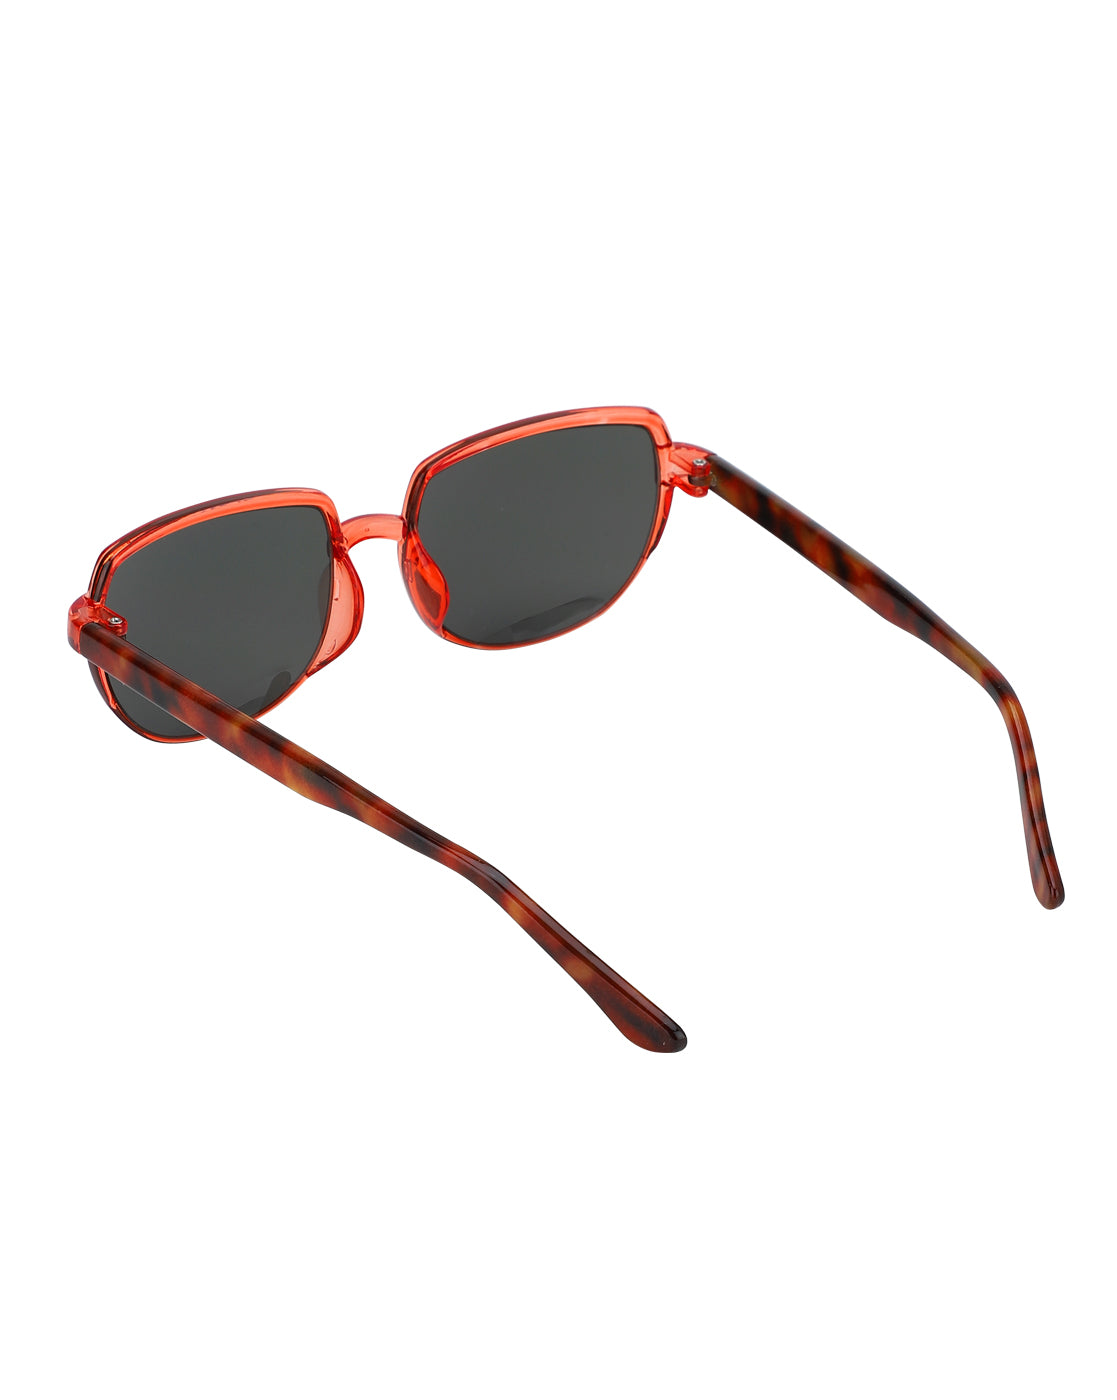 Carlton London Oval Sunglasses For Women